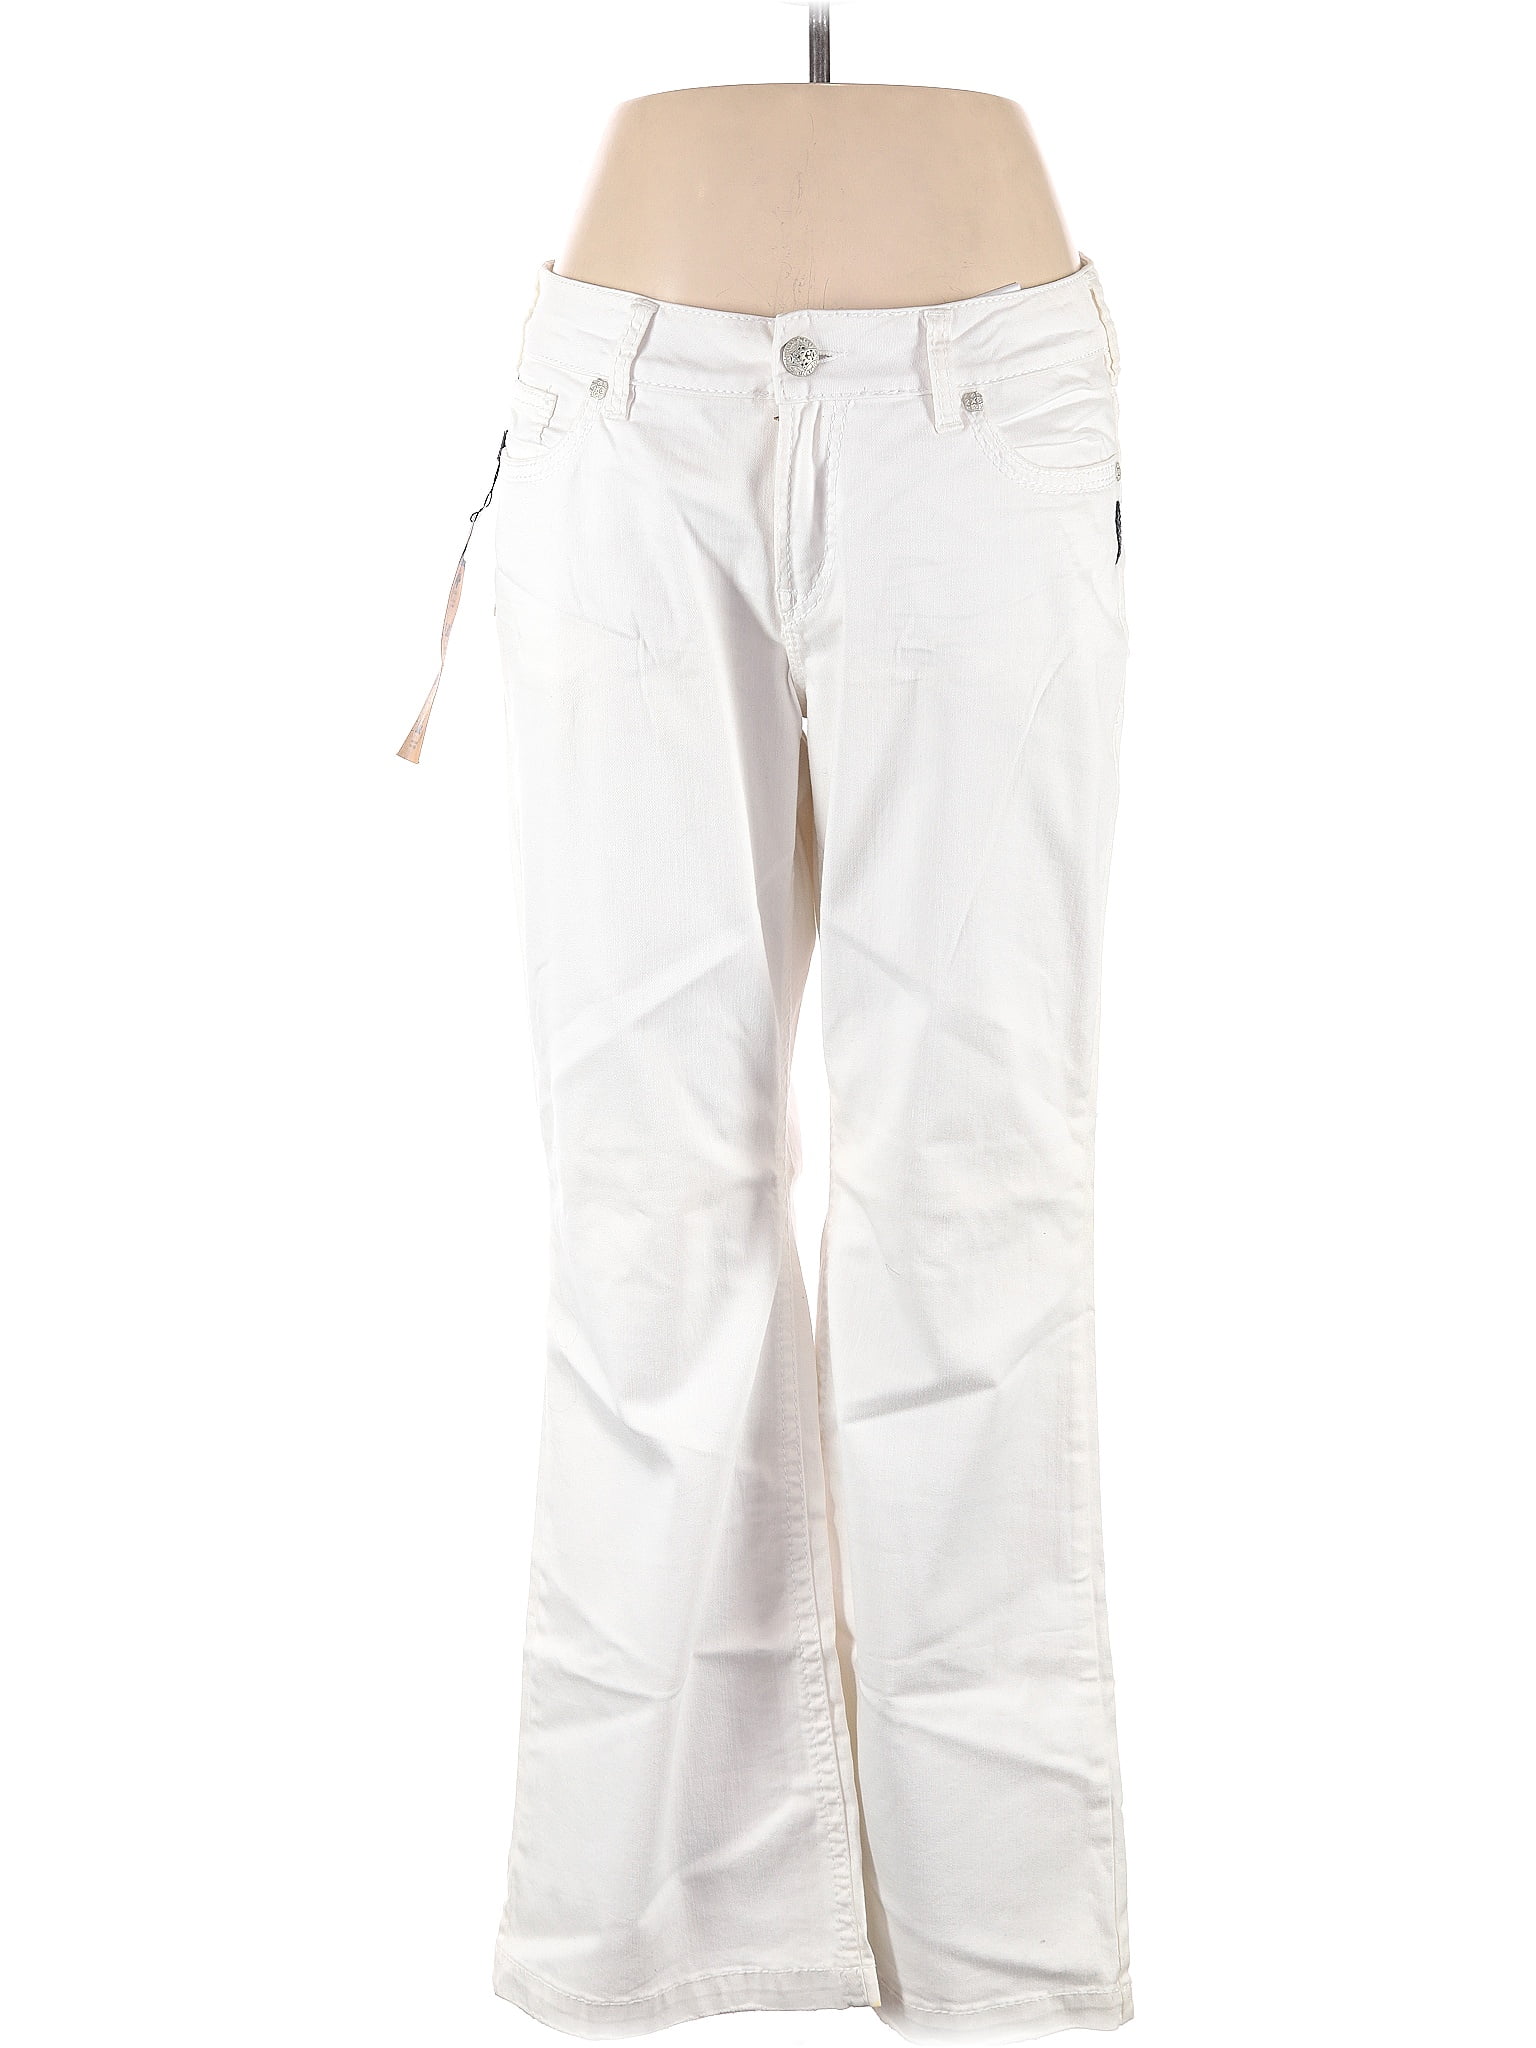 Marika Multi Color Silver Active Pants Size XL - 64% off